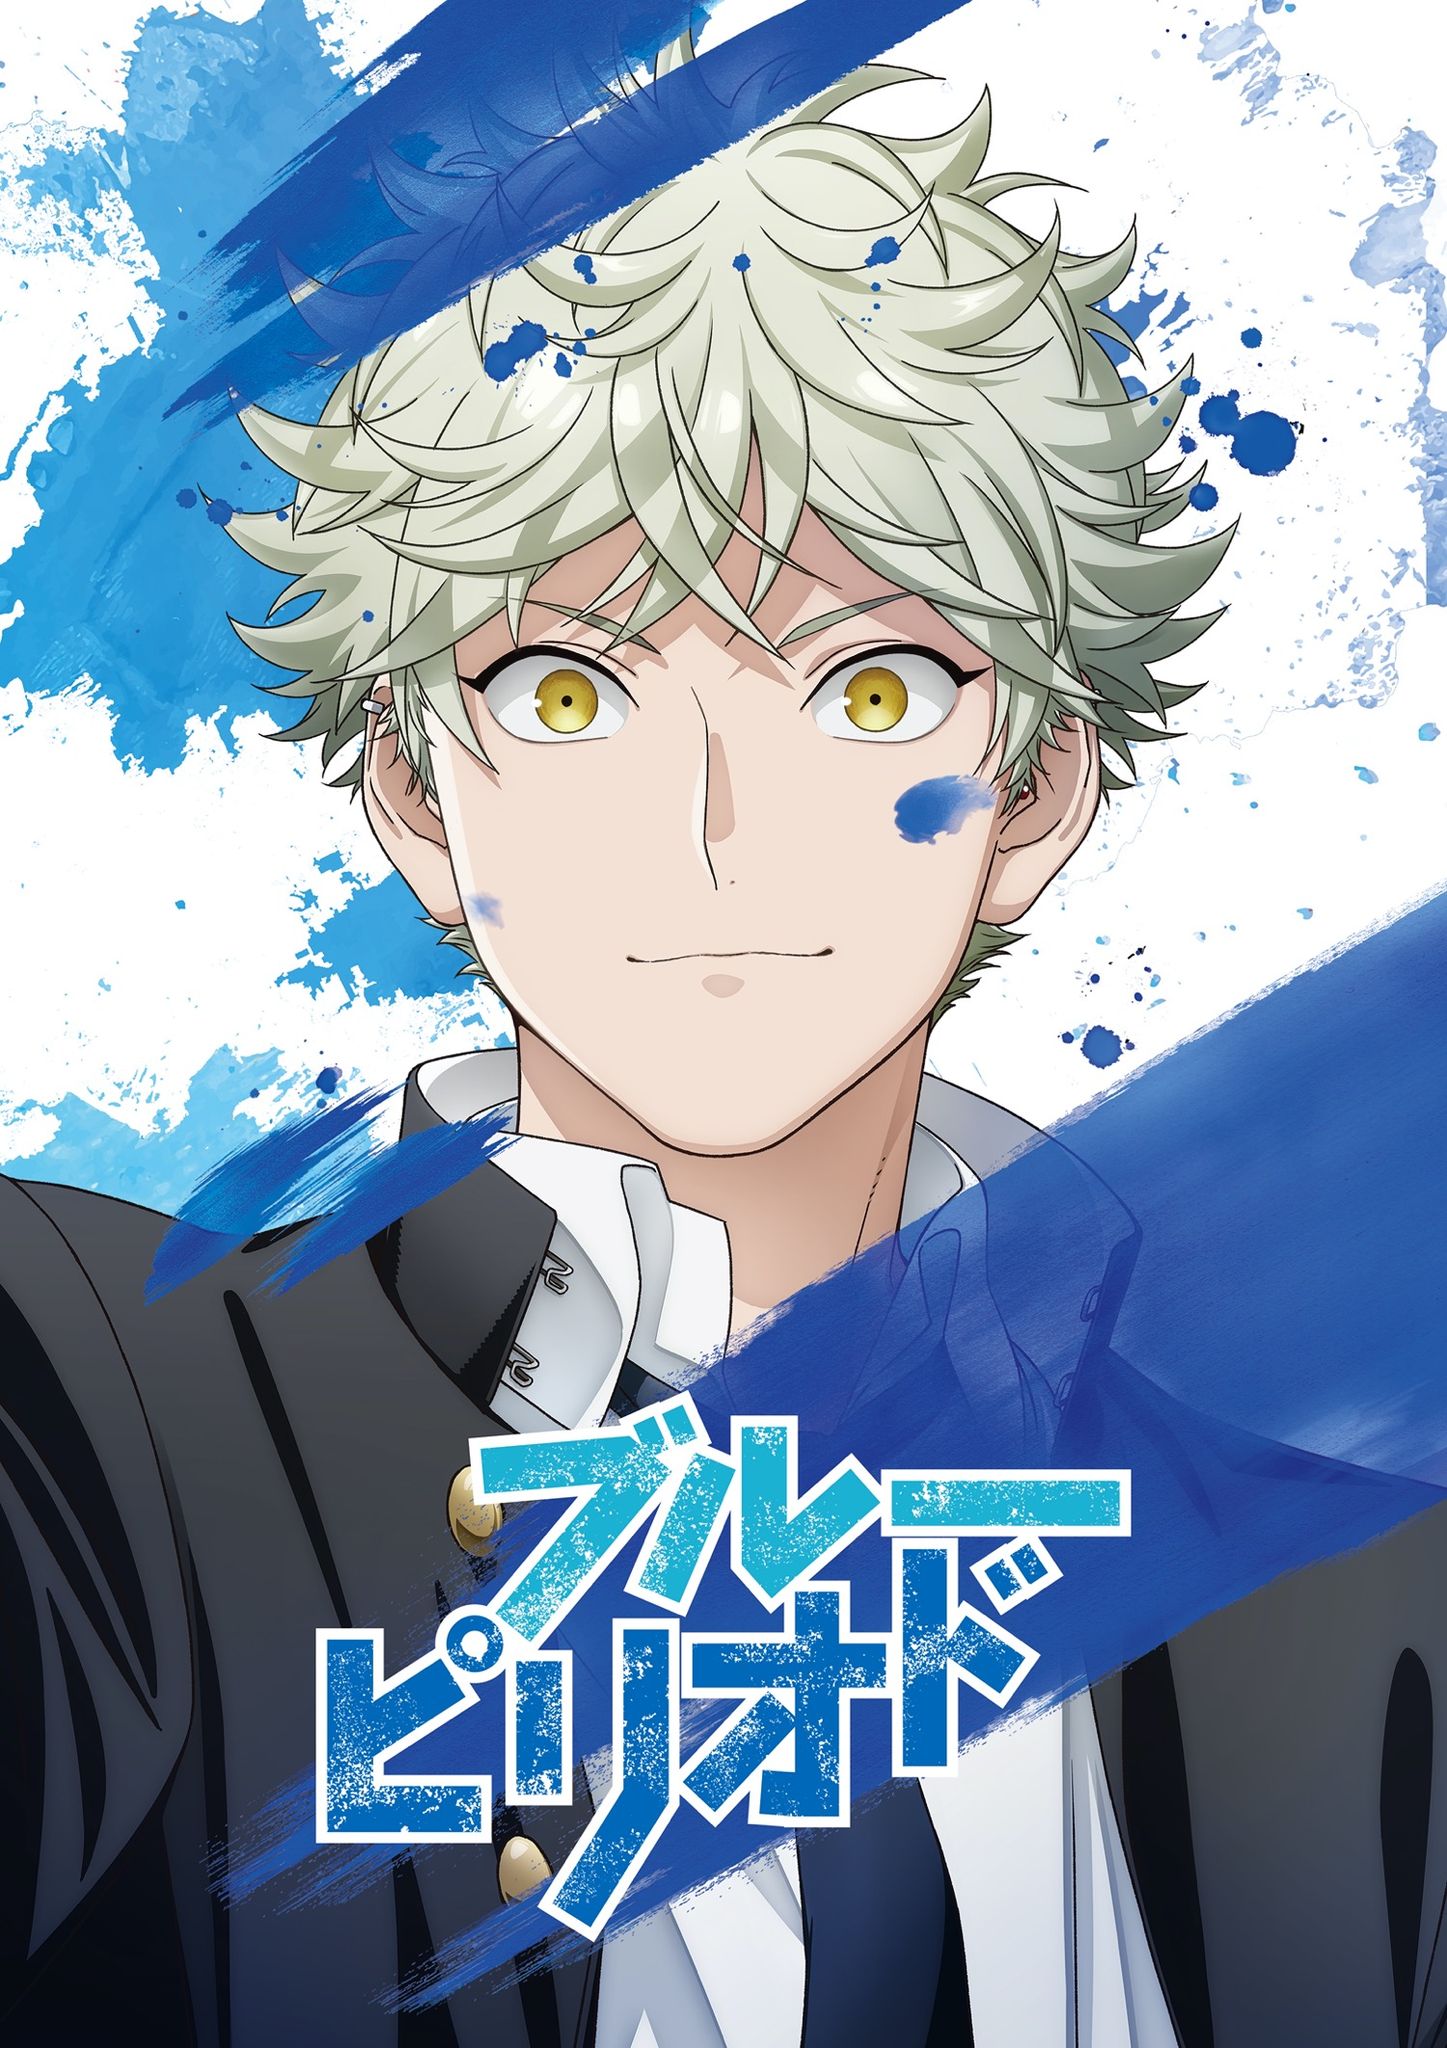 Le manga Blue Period adapté en anime ! (EDIT) - Gaak